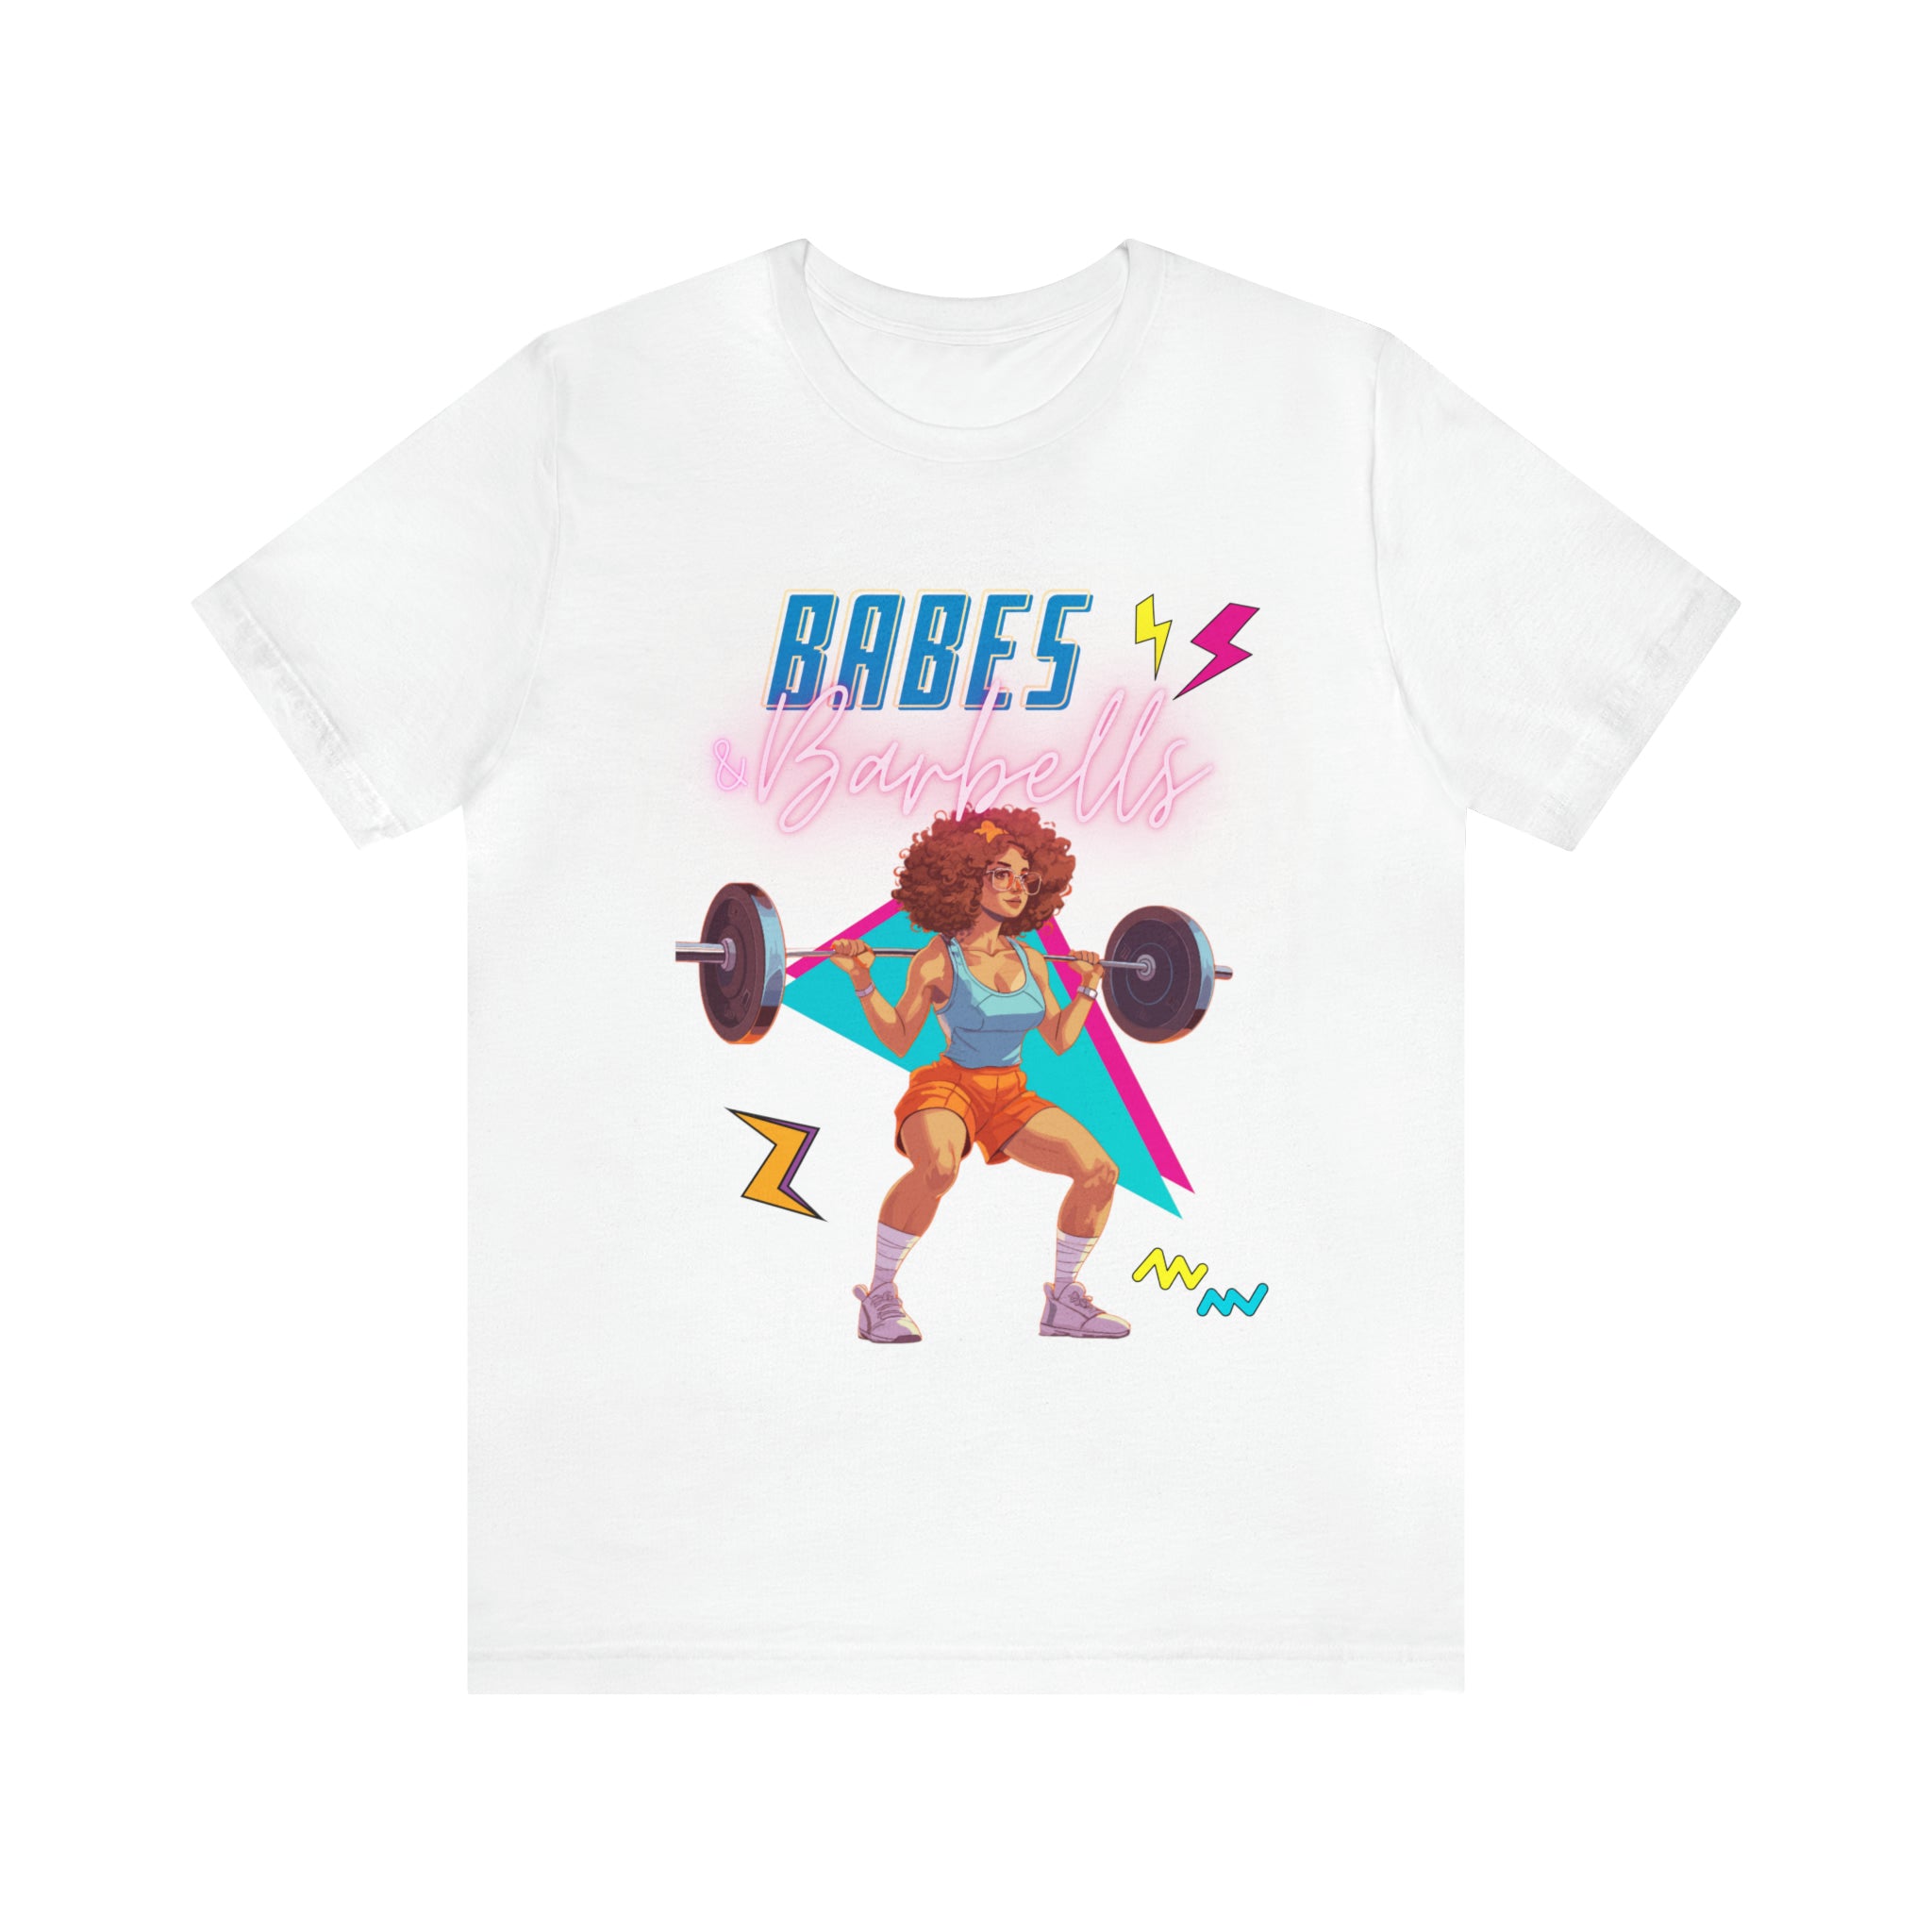 Babes & Barbell's Unisex T-shirt